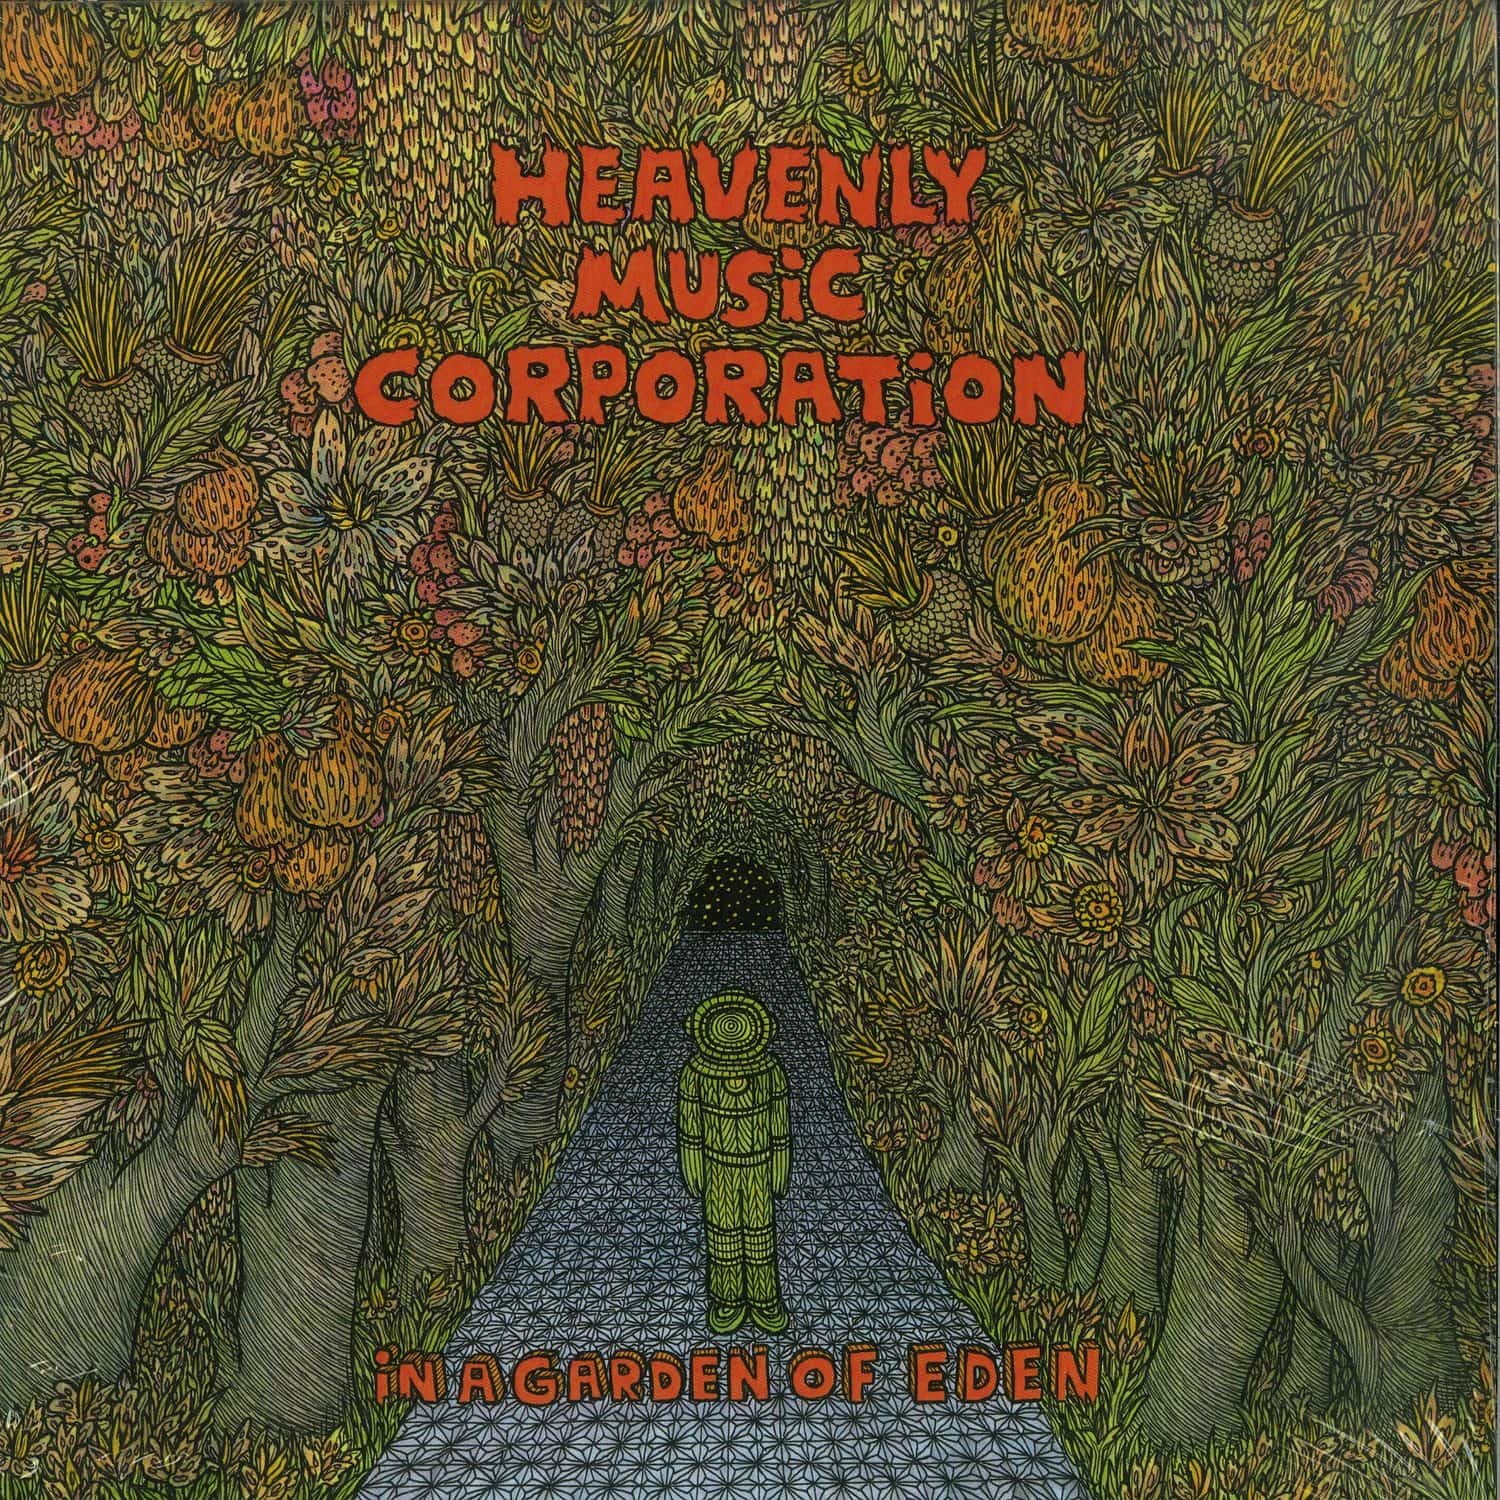 Heavenly Music Corporation - IN A GARDEN OF EDEN